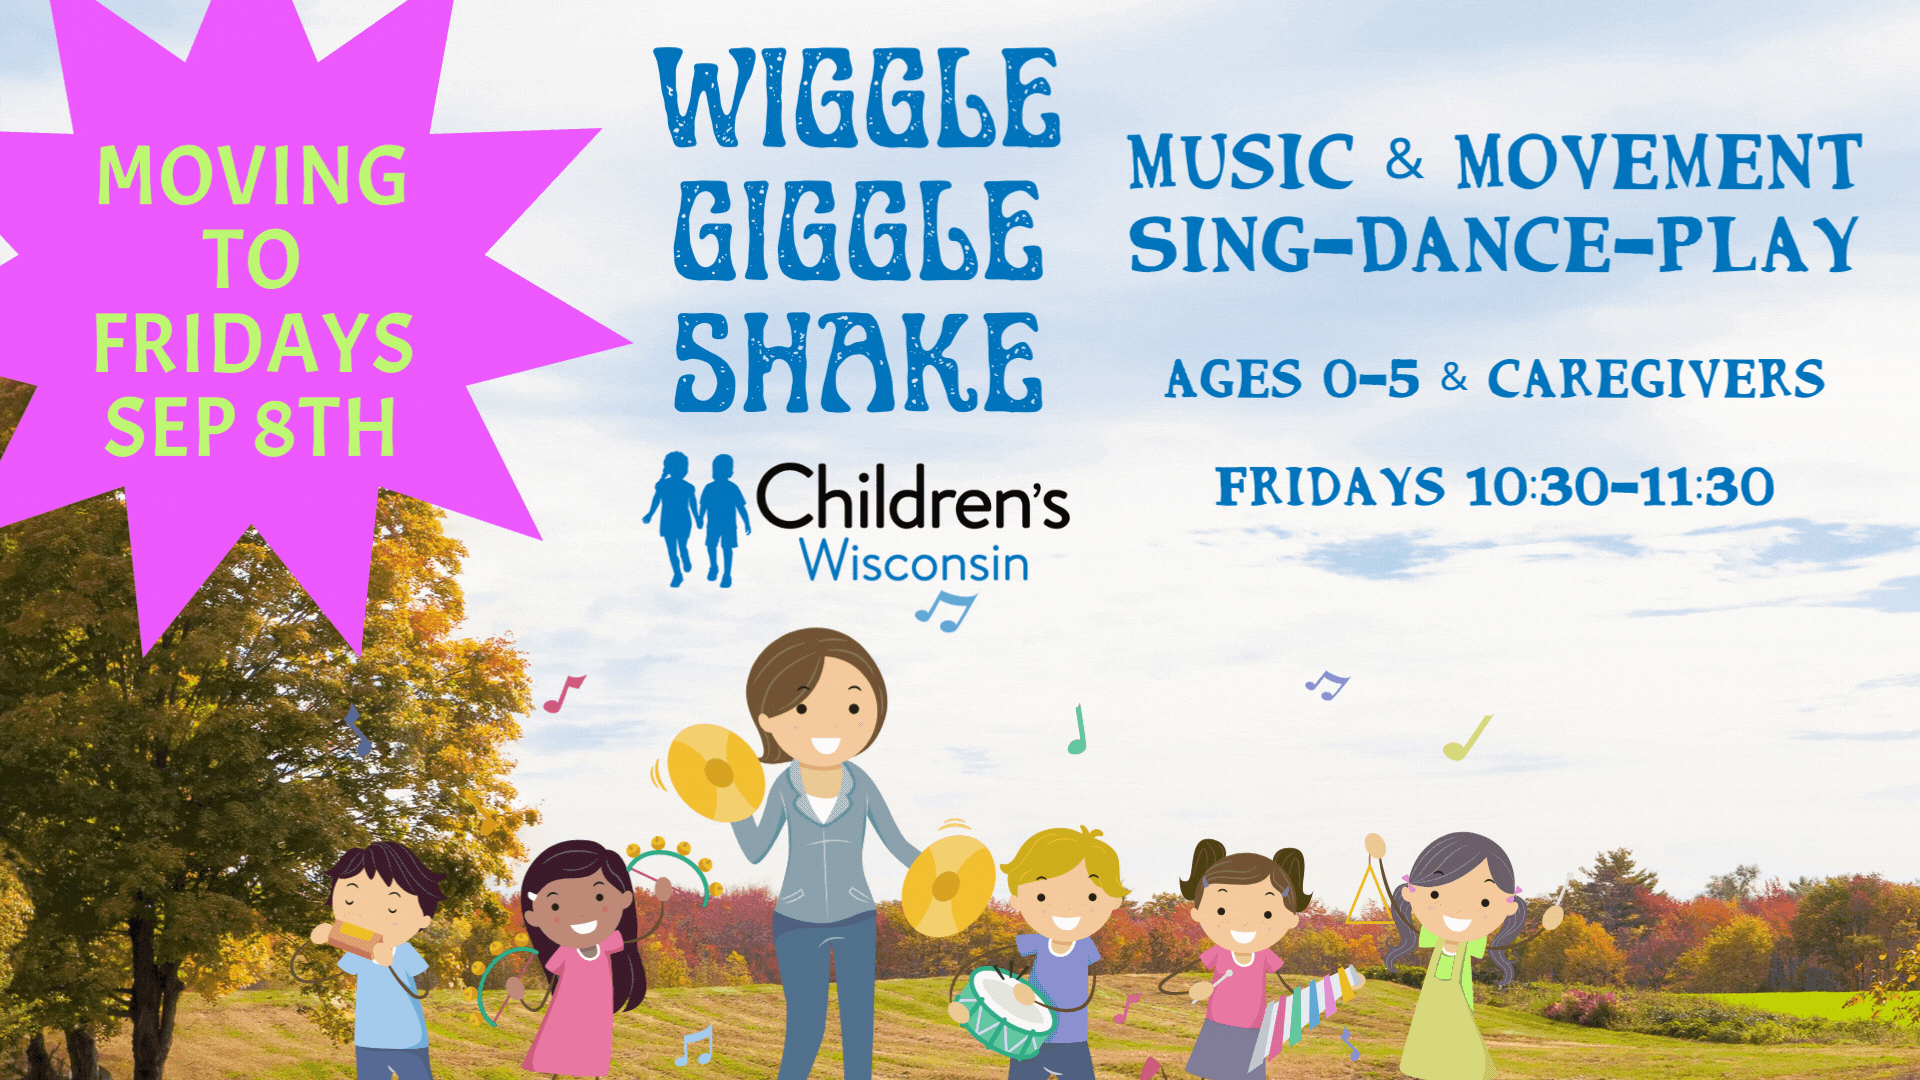 Wiggle, Giggle, Shake on Fridays Starting September 8th